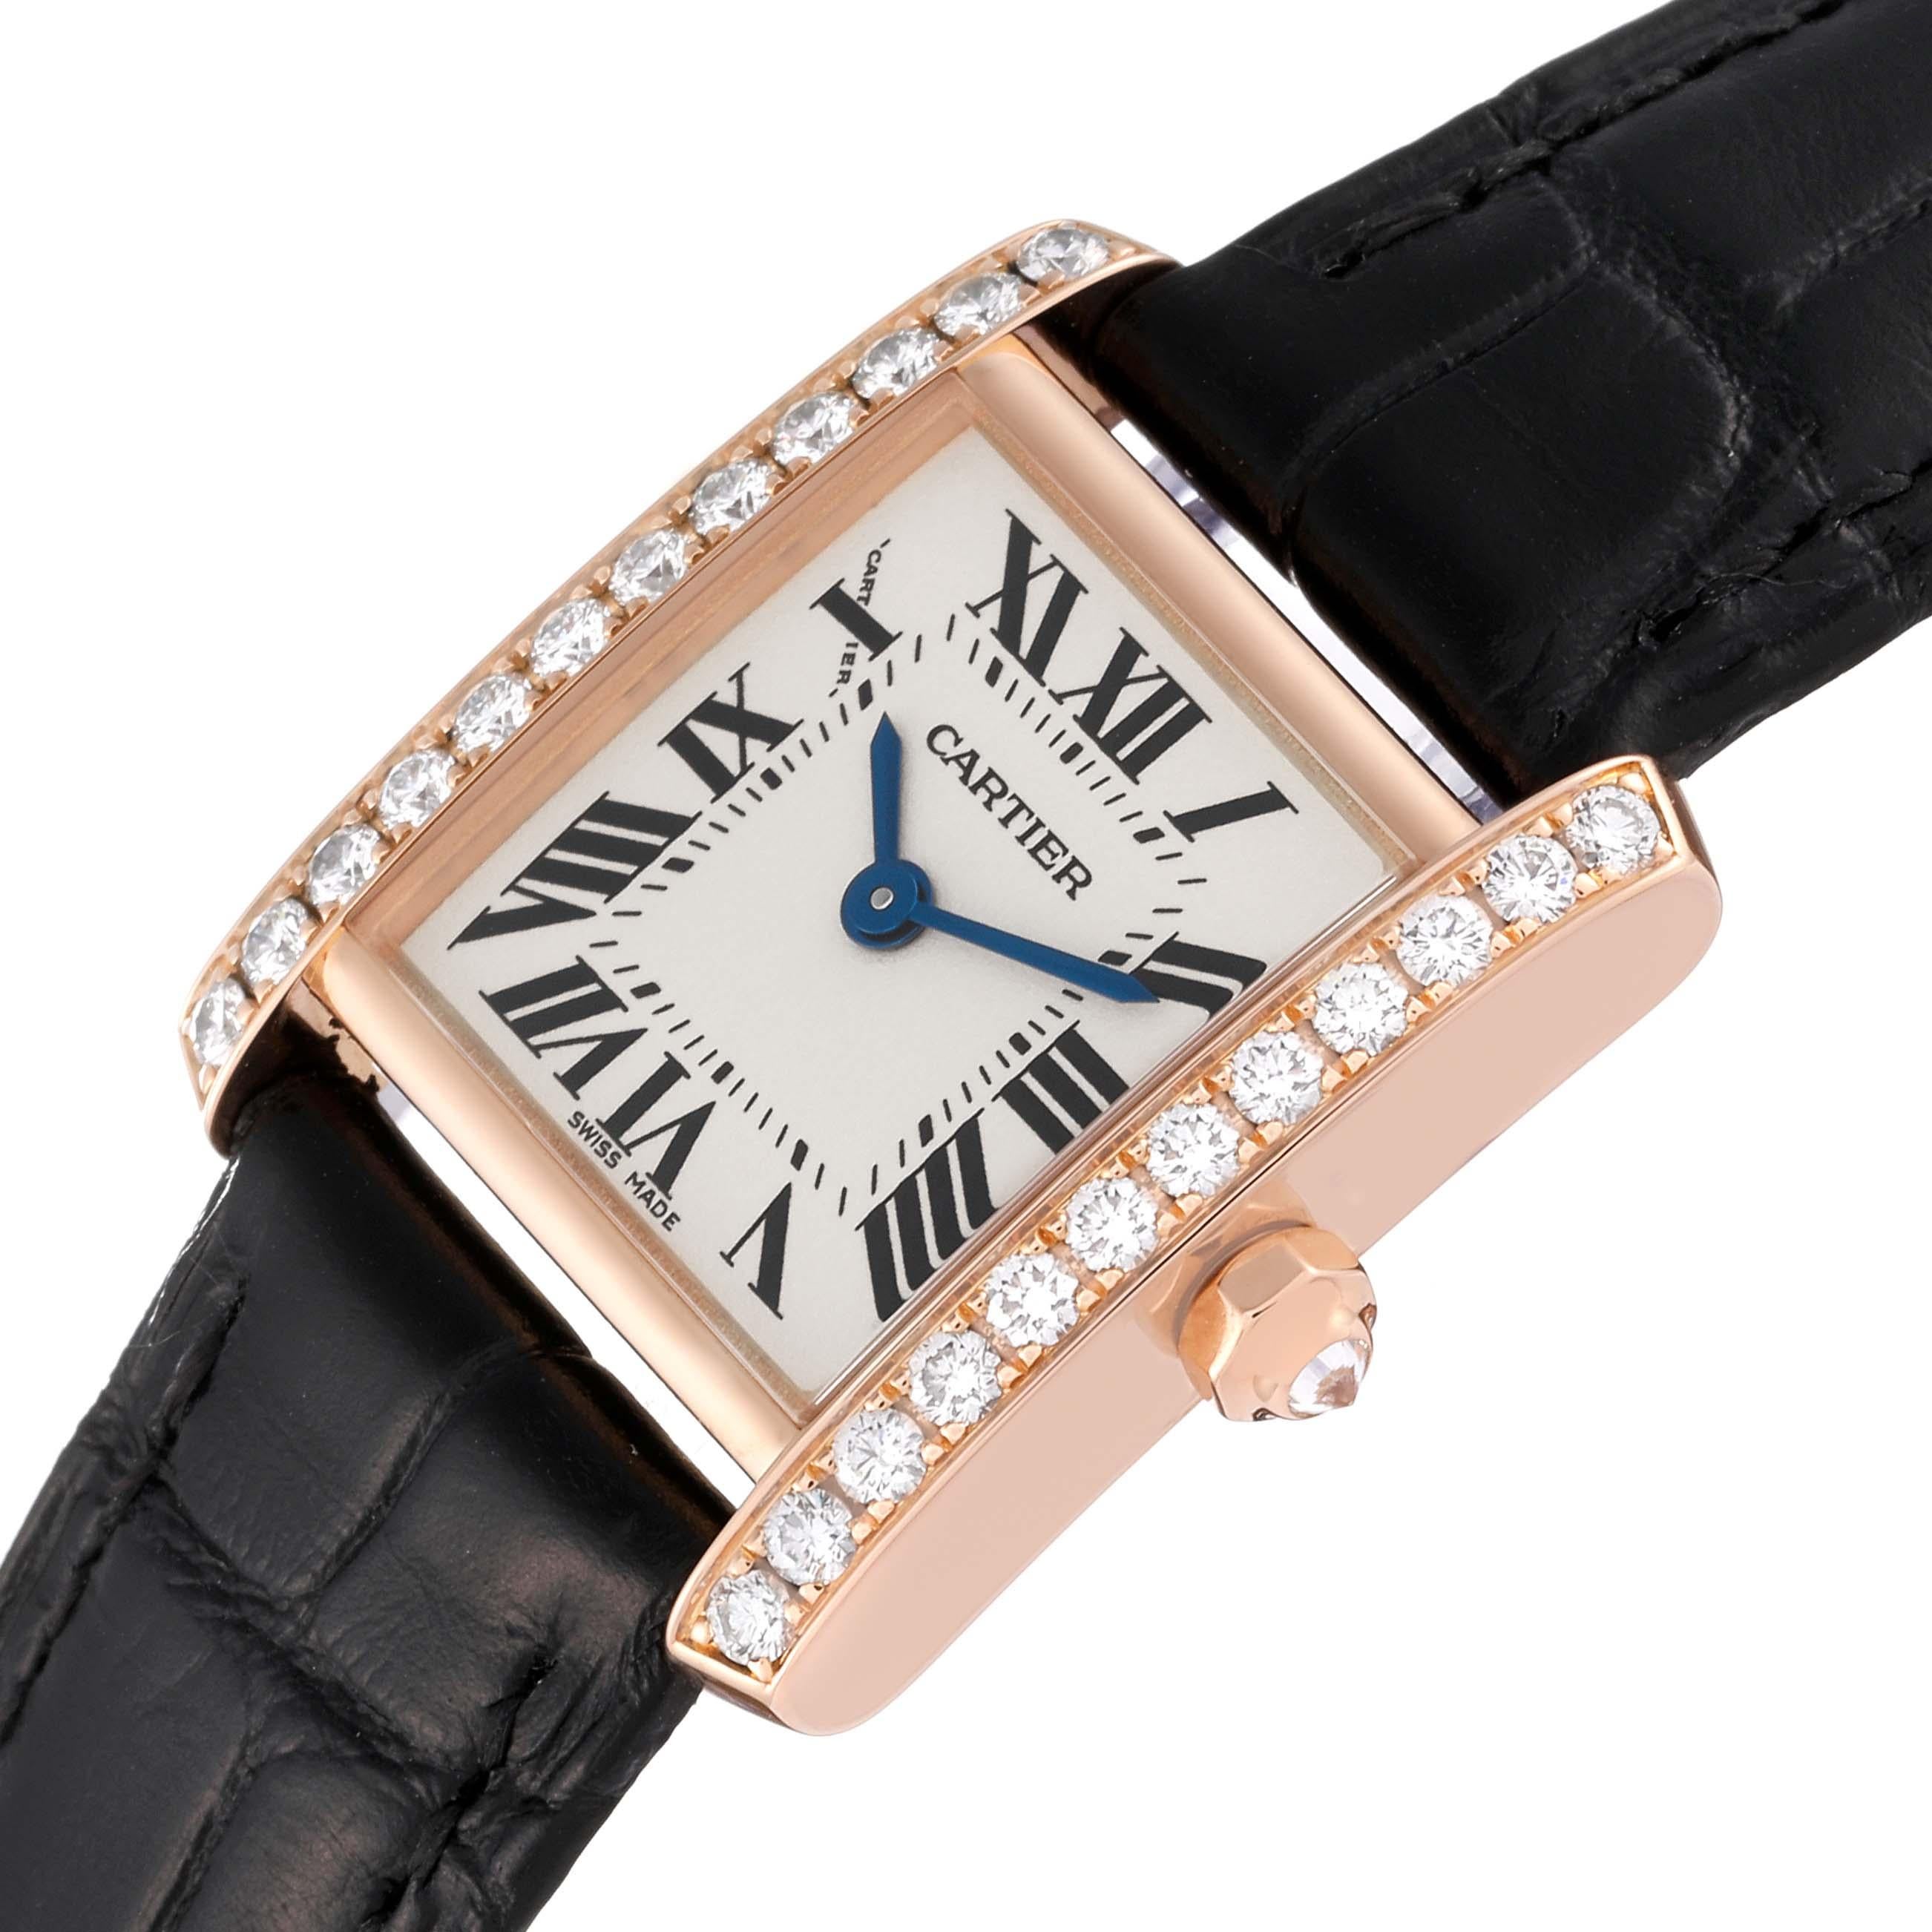 Cartier Tank Francaise Rose Gold Diamond Black Strap Ladies Watch WE104531 1